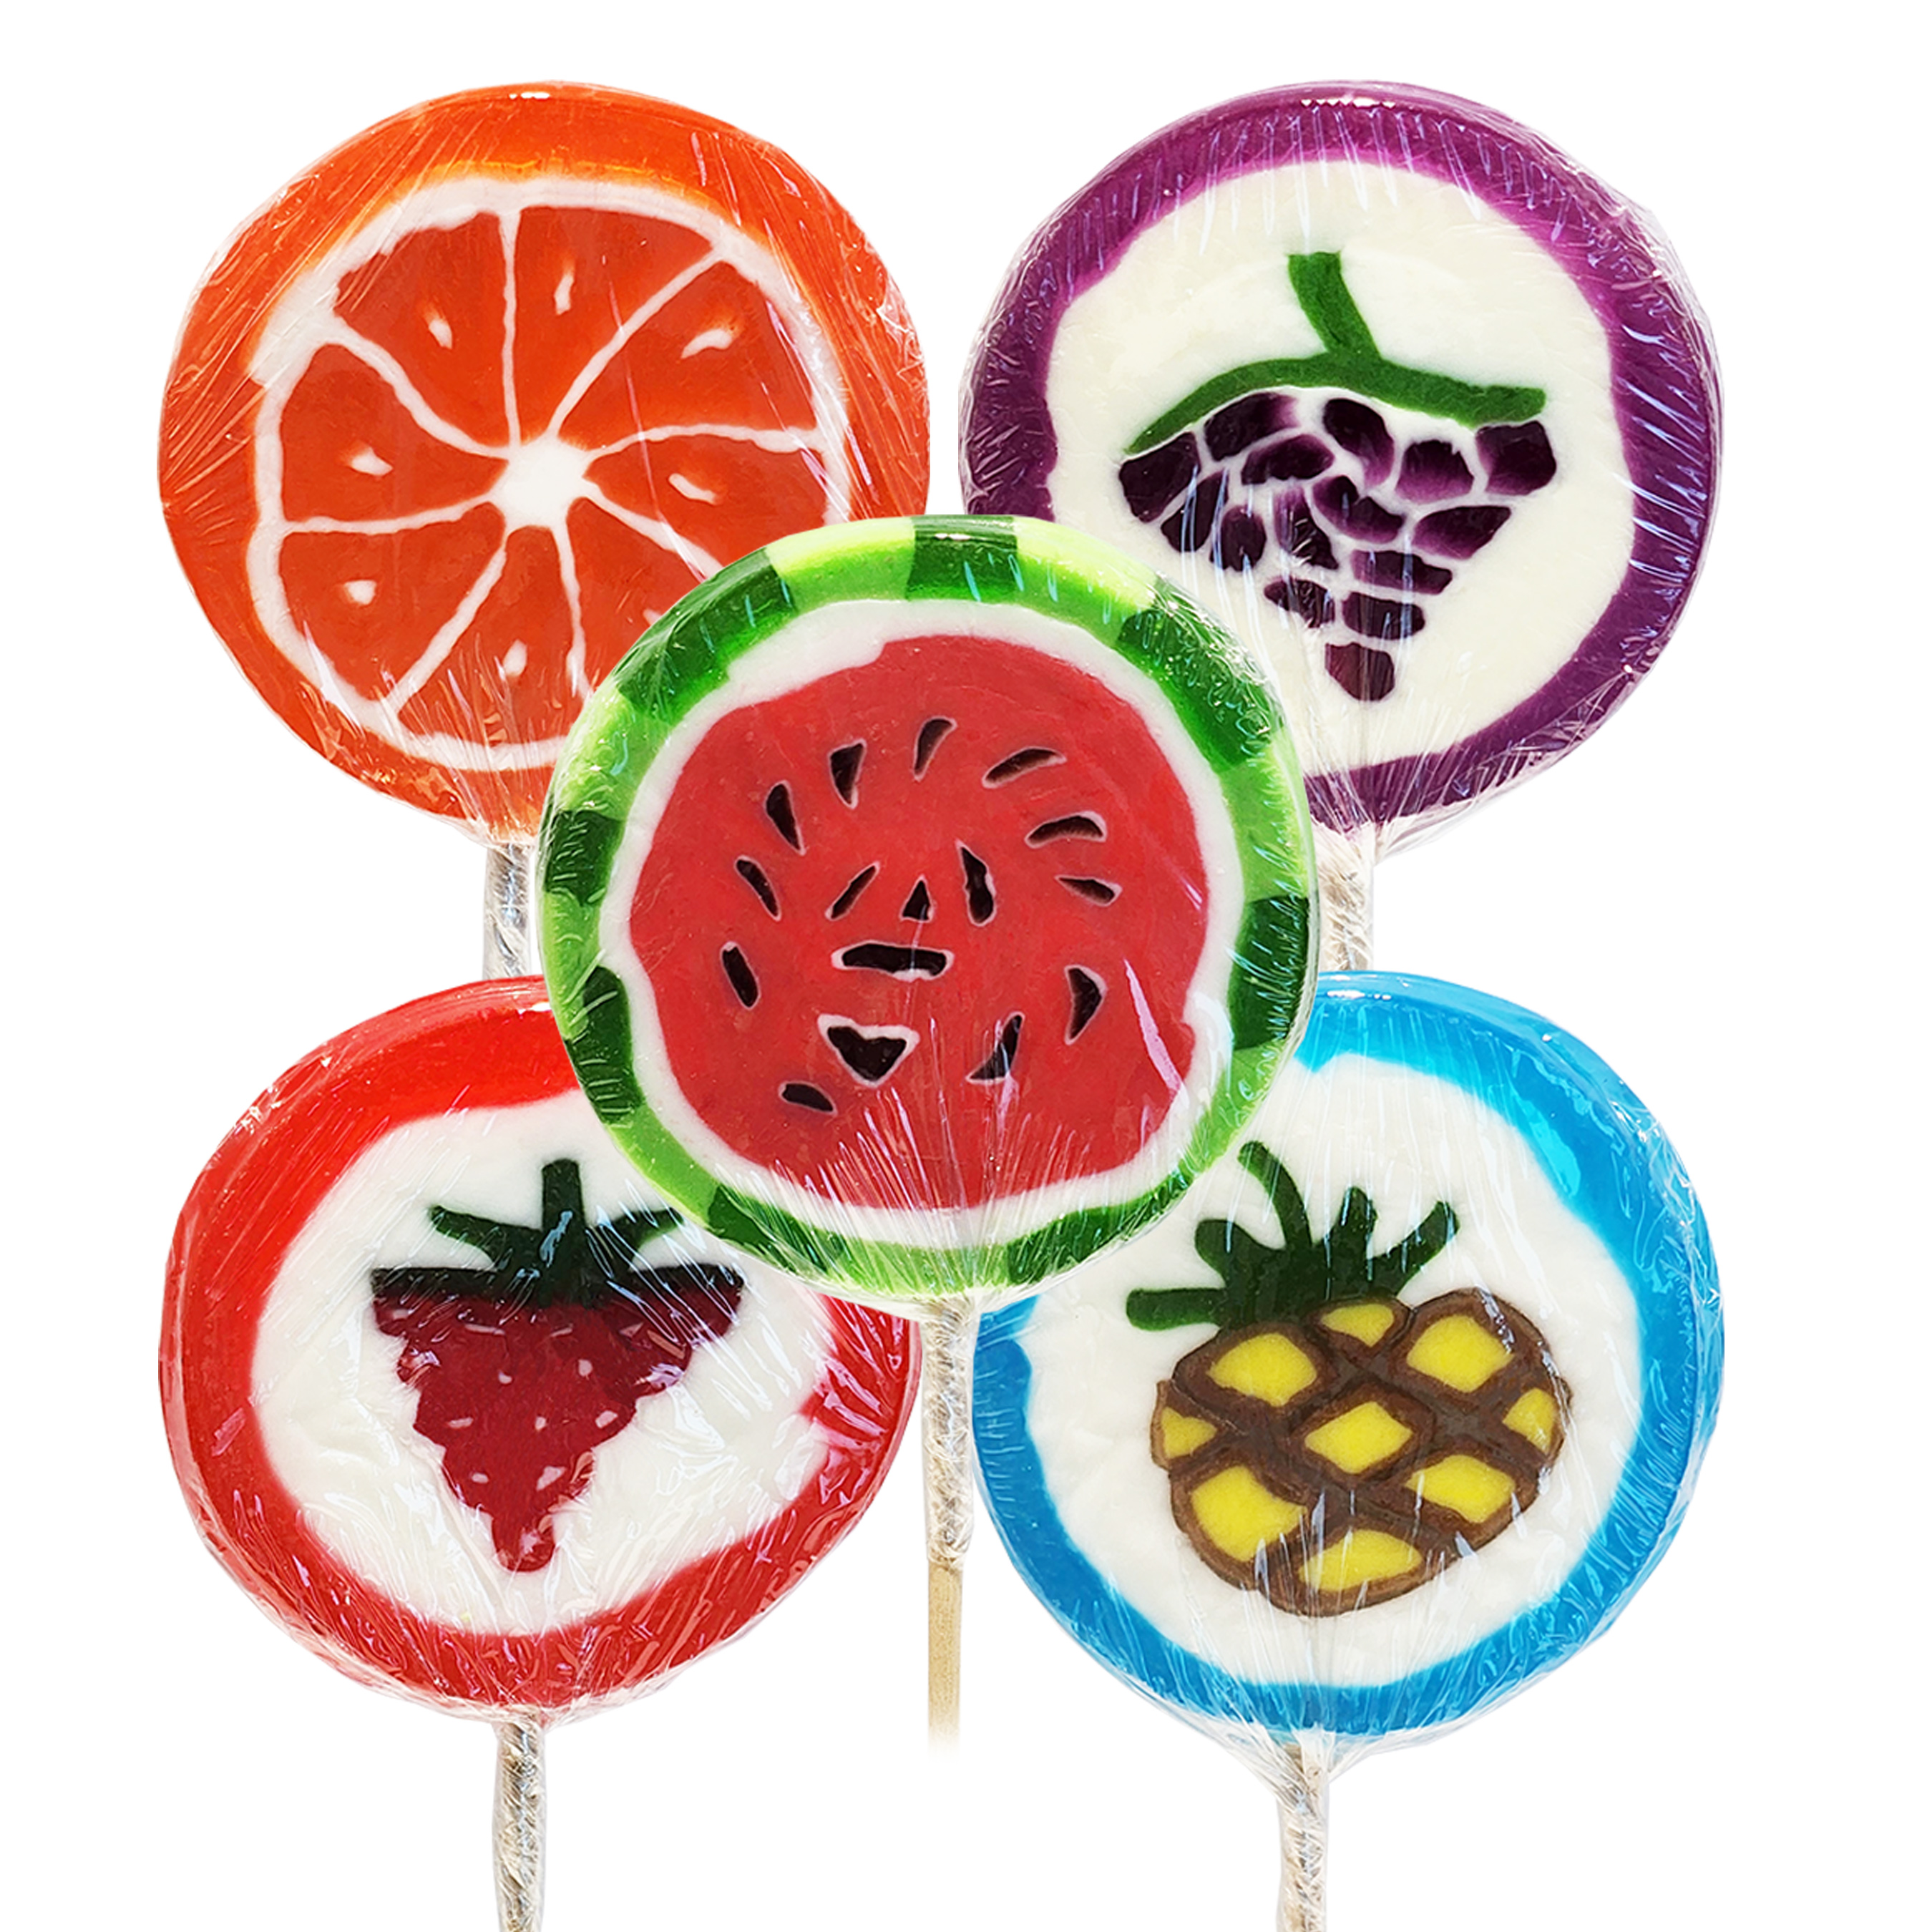 Jumbo Fruits style. 20 pieces per bag. lollipops include orange, grape, pineapple, strawberry, watermelon